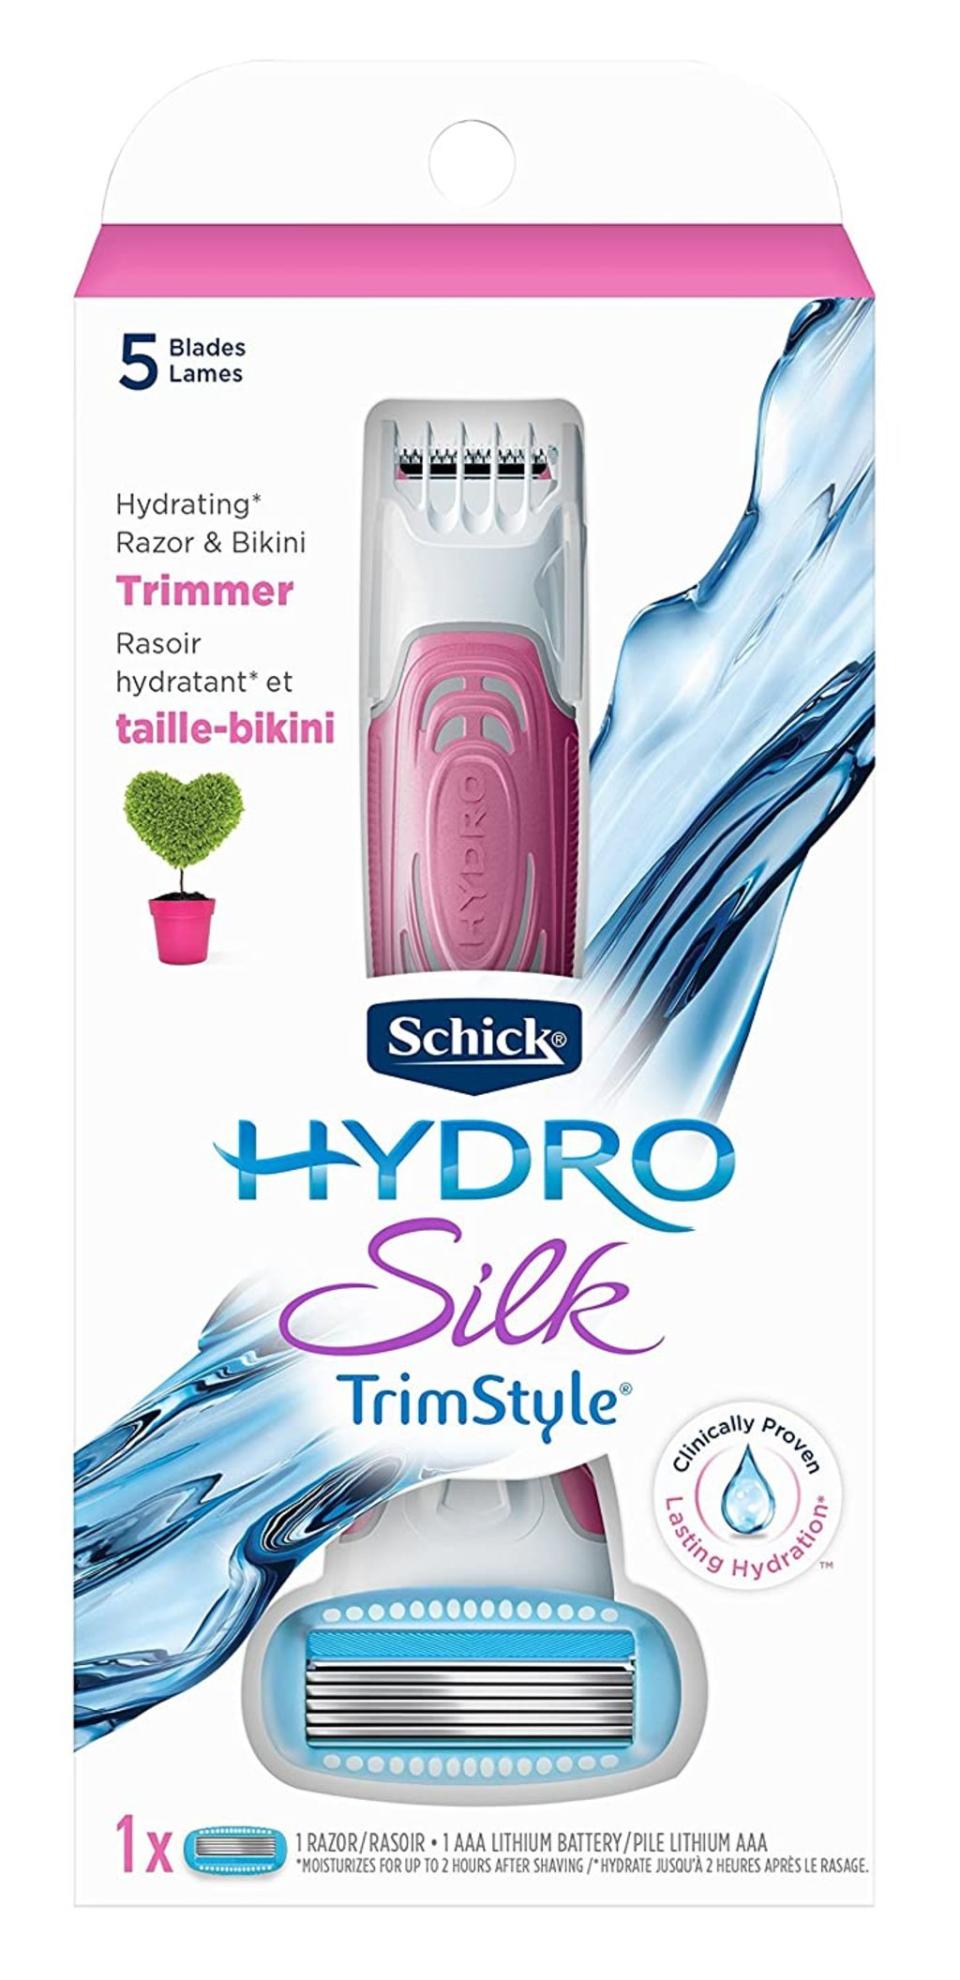 schick hydro silk trimstyle, best razors for women